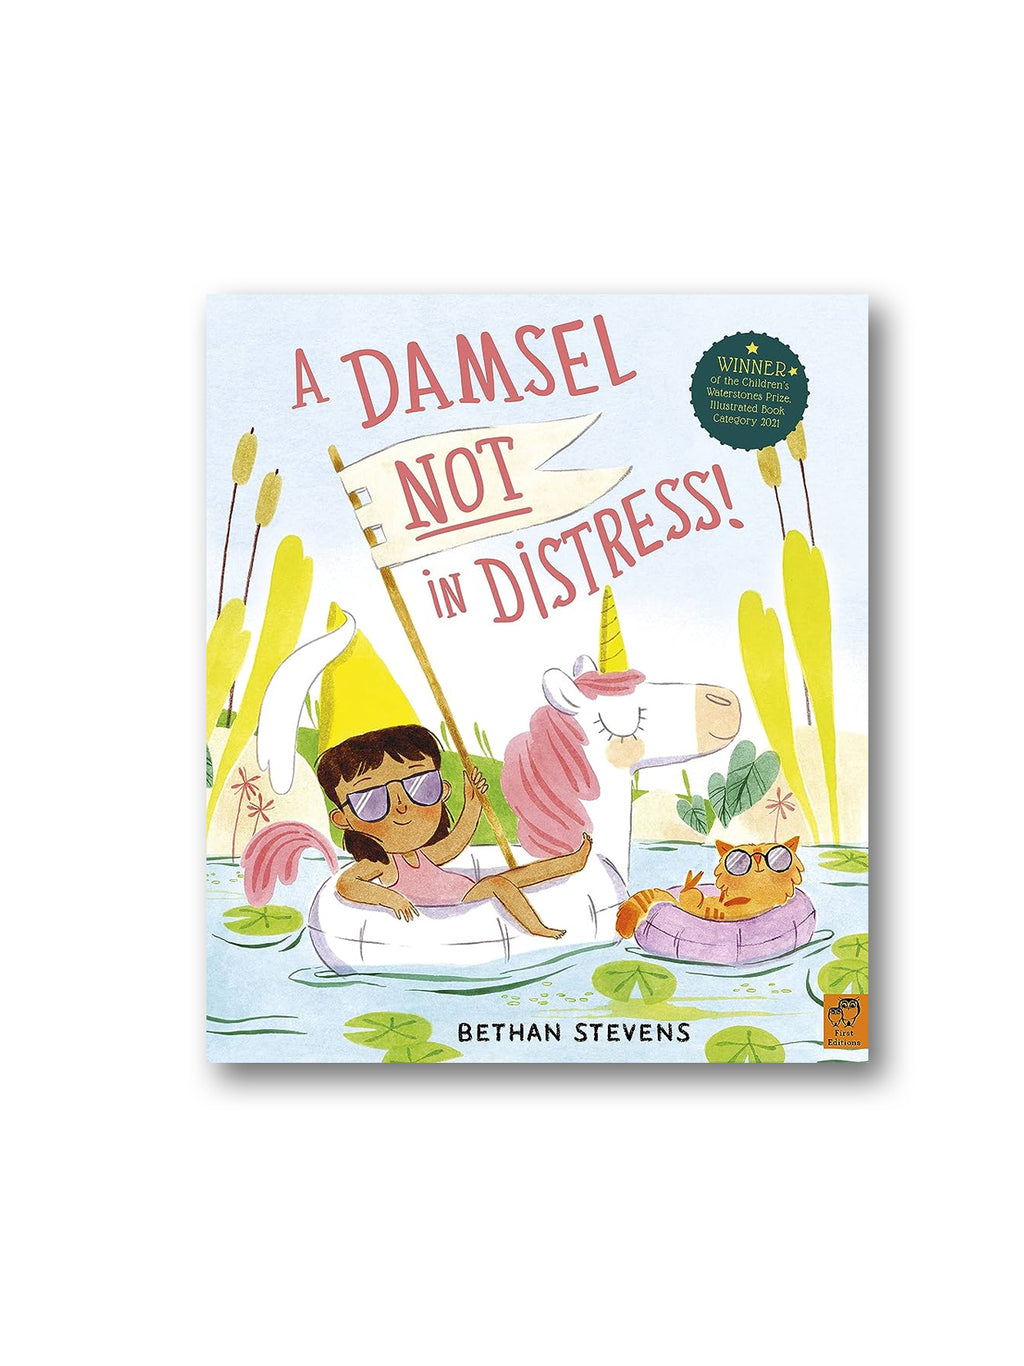 A Damsel Not in Distress!